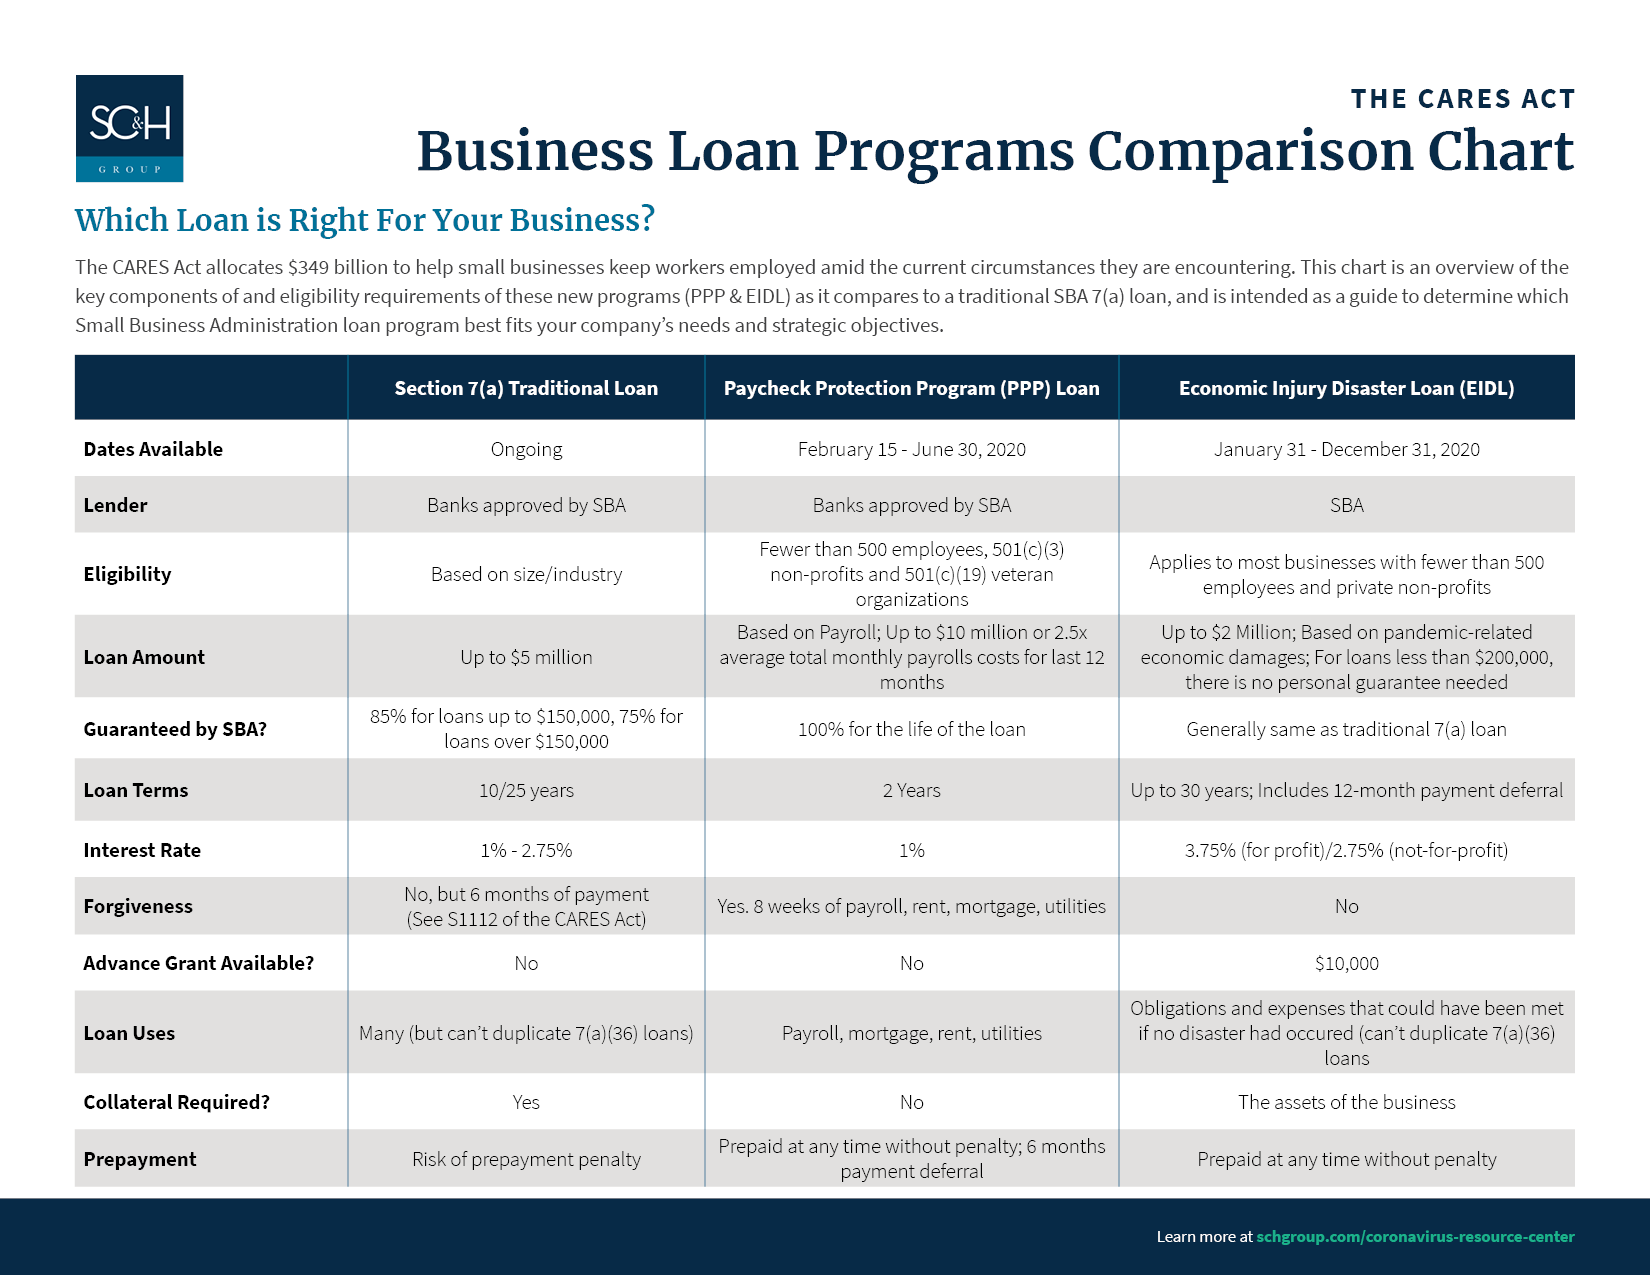 CARES Act - Business Loan Programs Comparison Chart